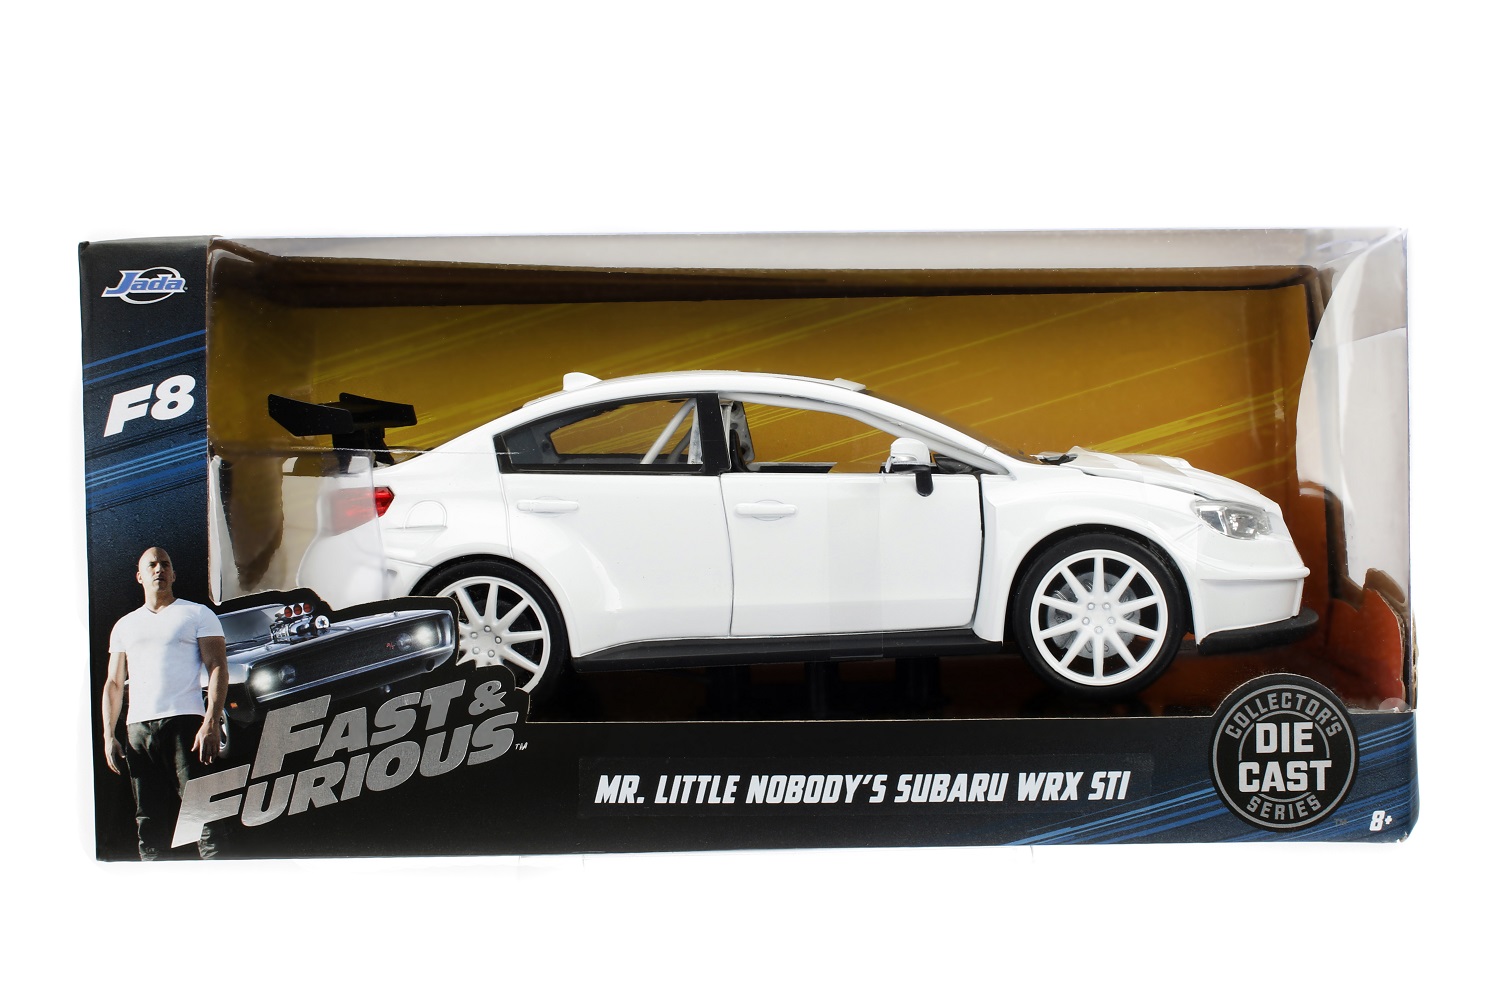 Miniatura Subaru Wrx Sti Mr Little Nobody Velozes e Furiosos 1/24 Jada Toys